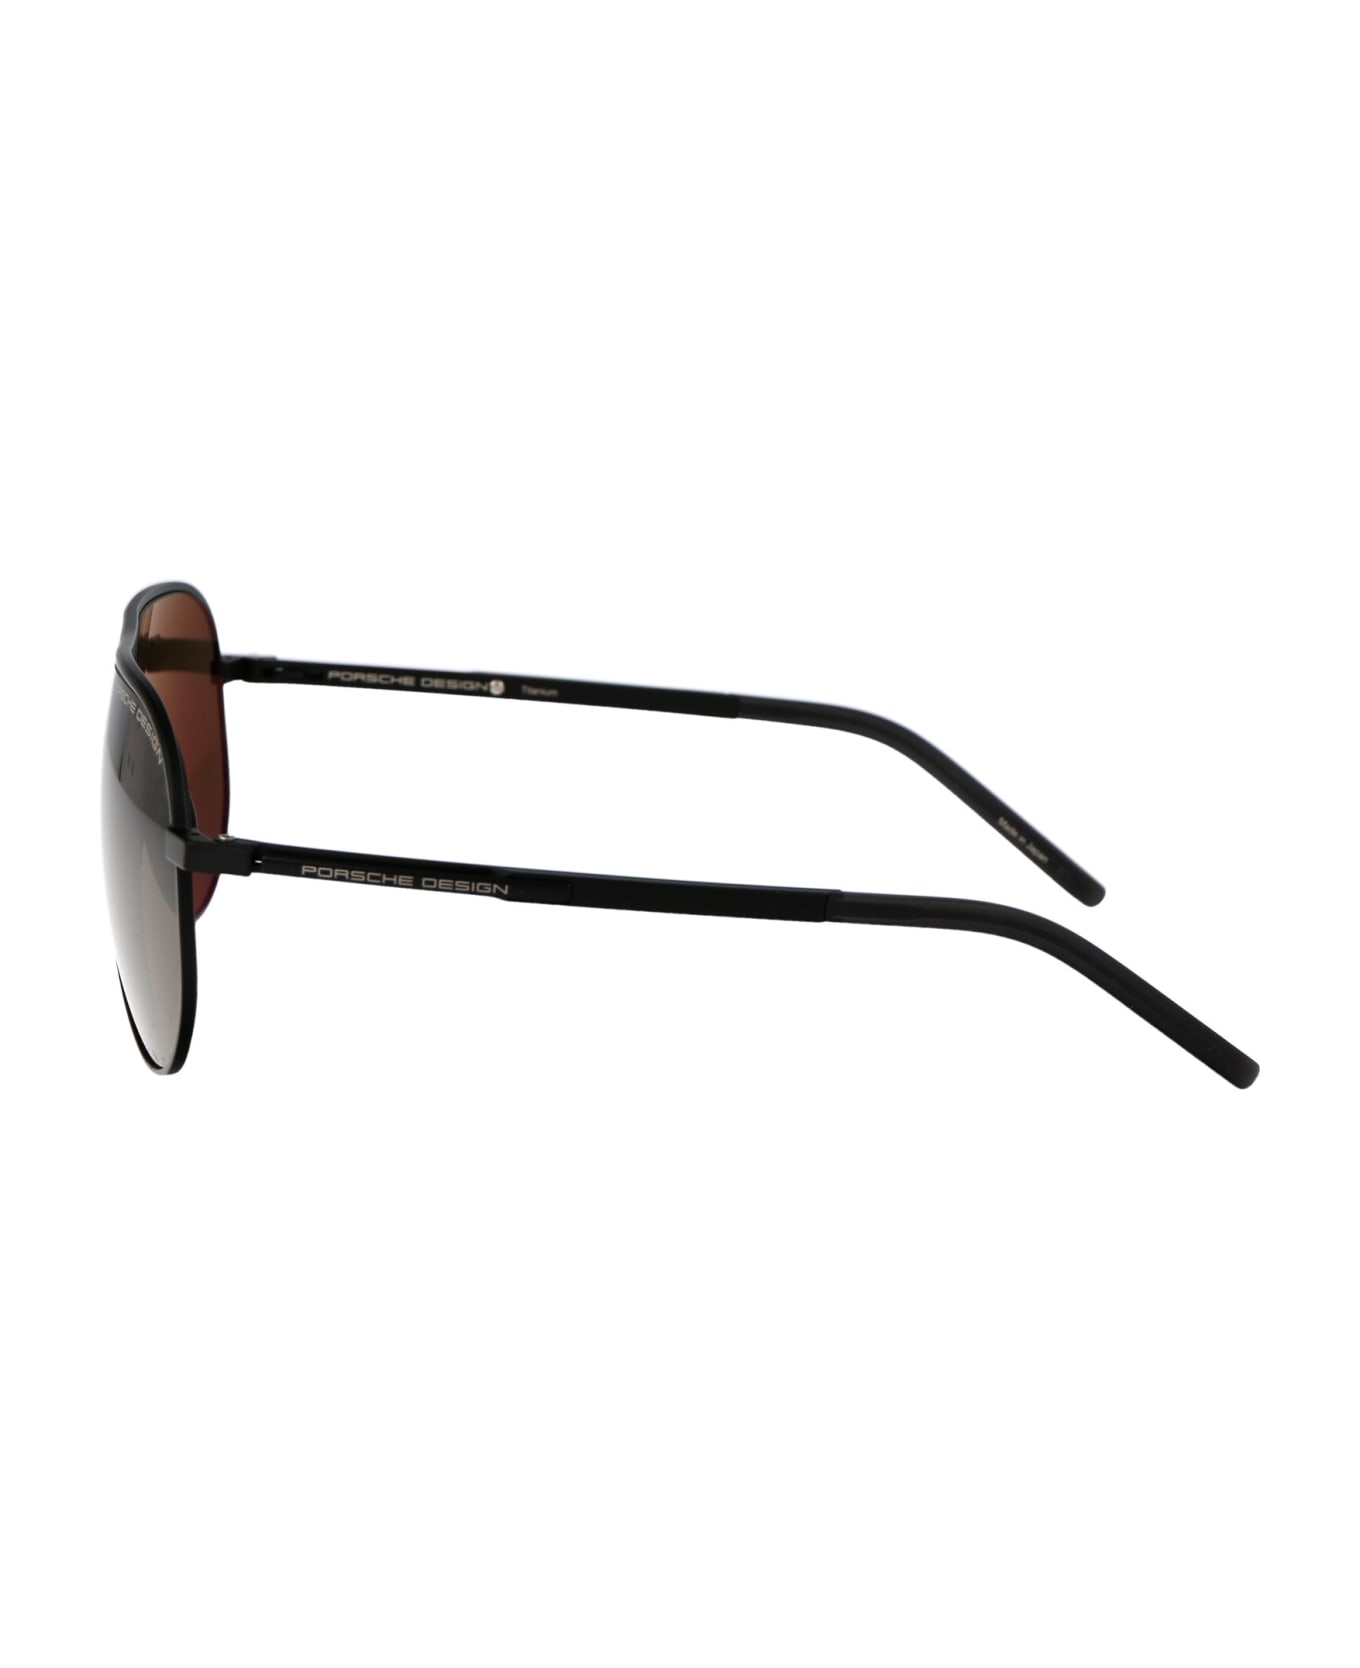 Porsche Design P8942 Sunglasses - A604 BLACK サングラス